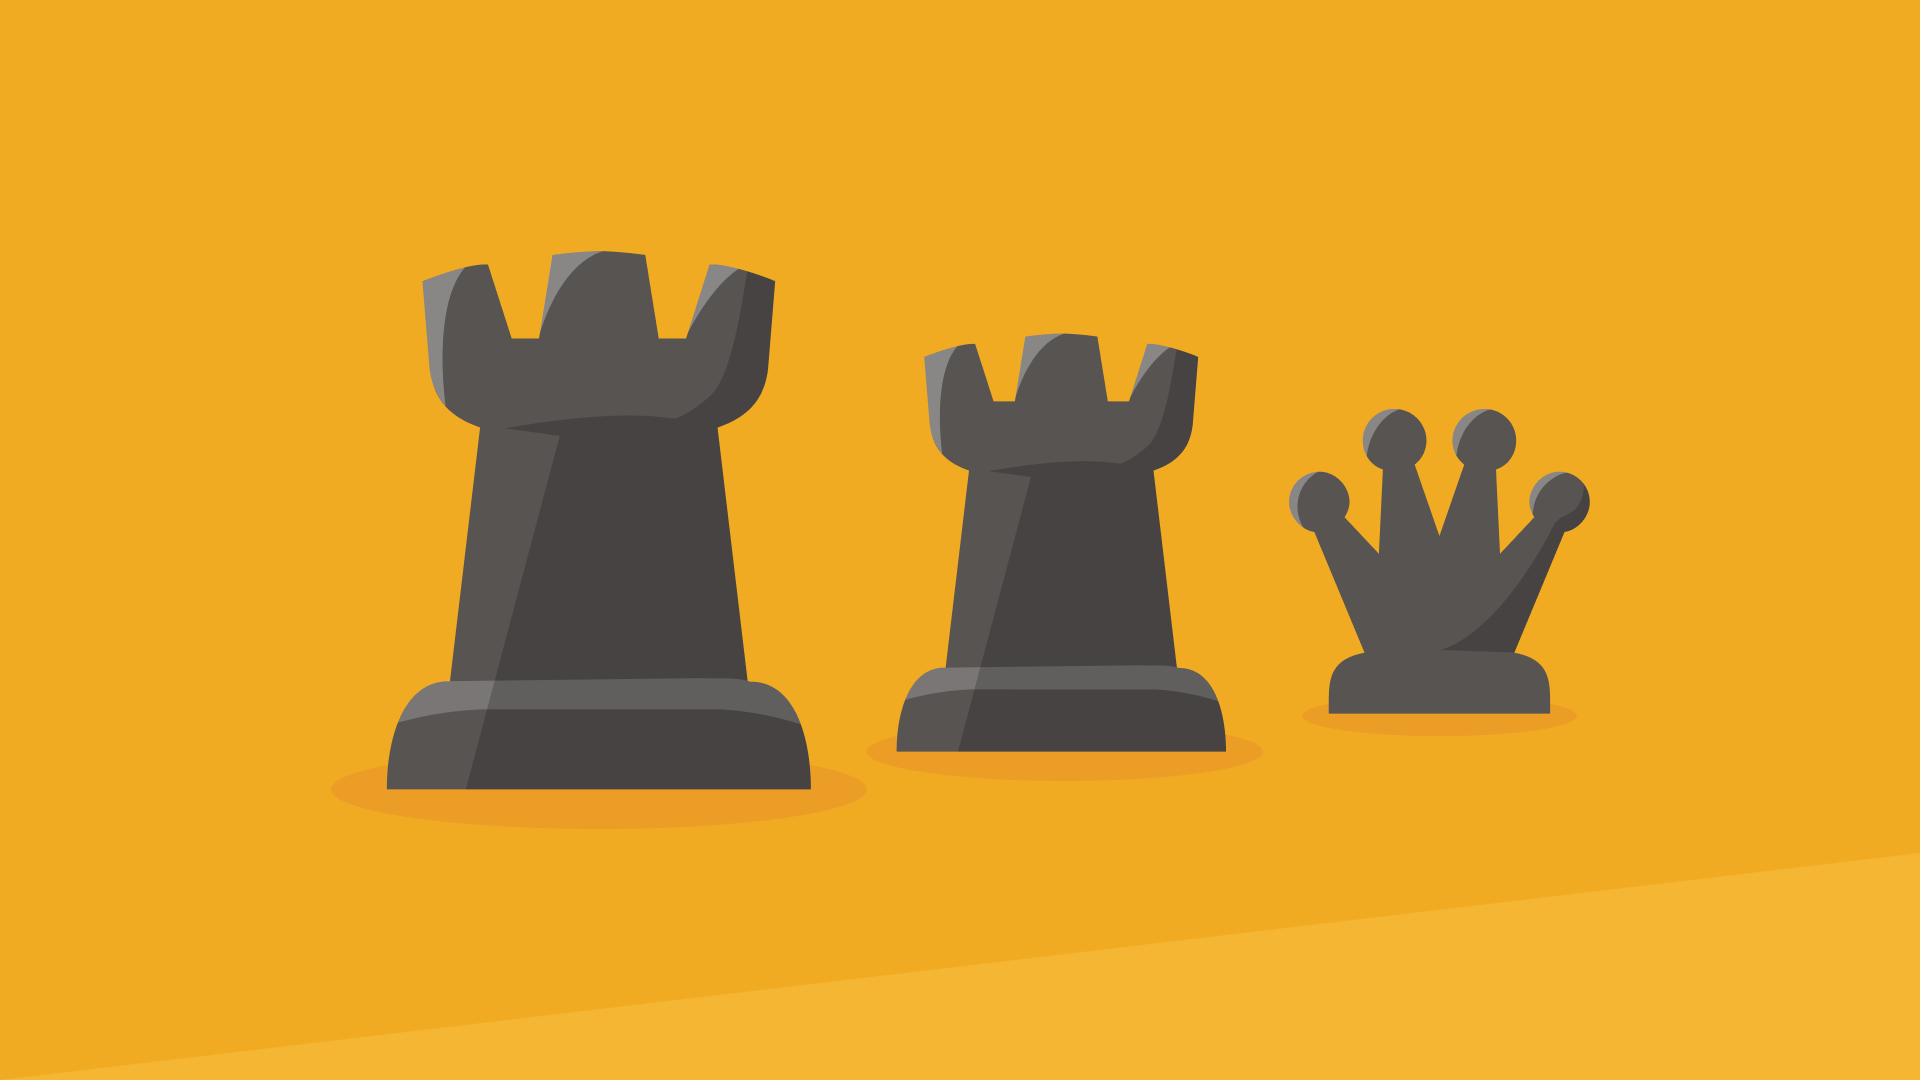 Alekhine's Gun - Chess Terms 